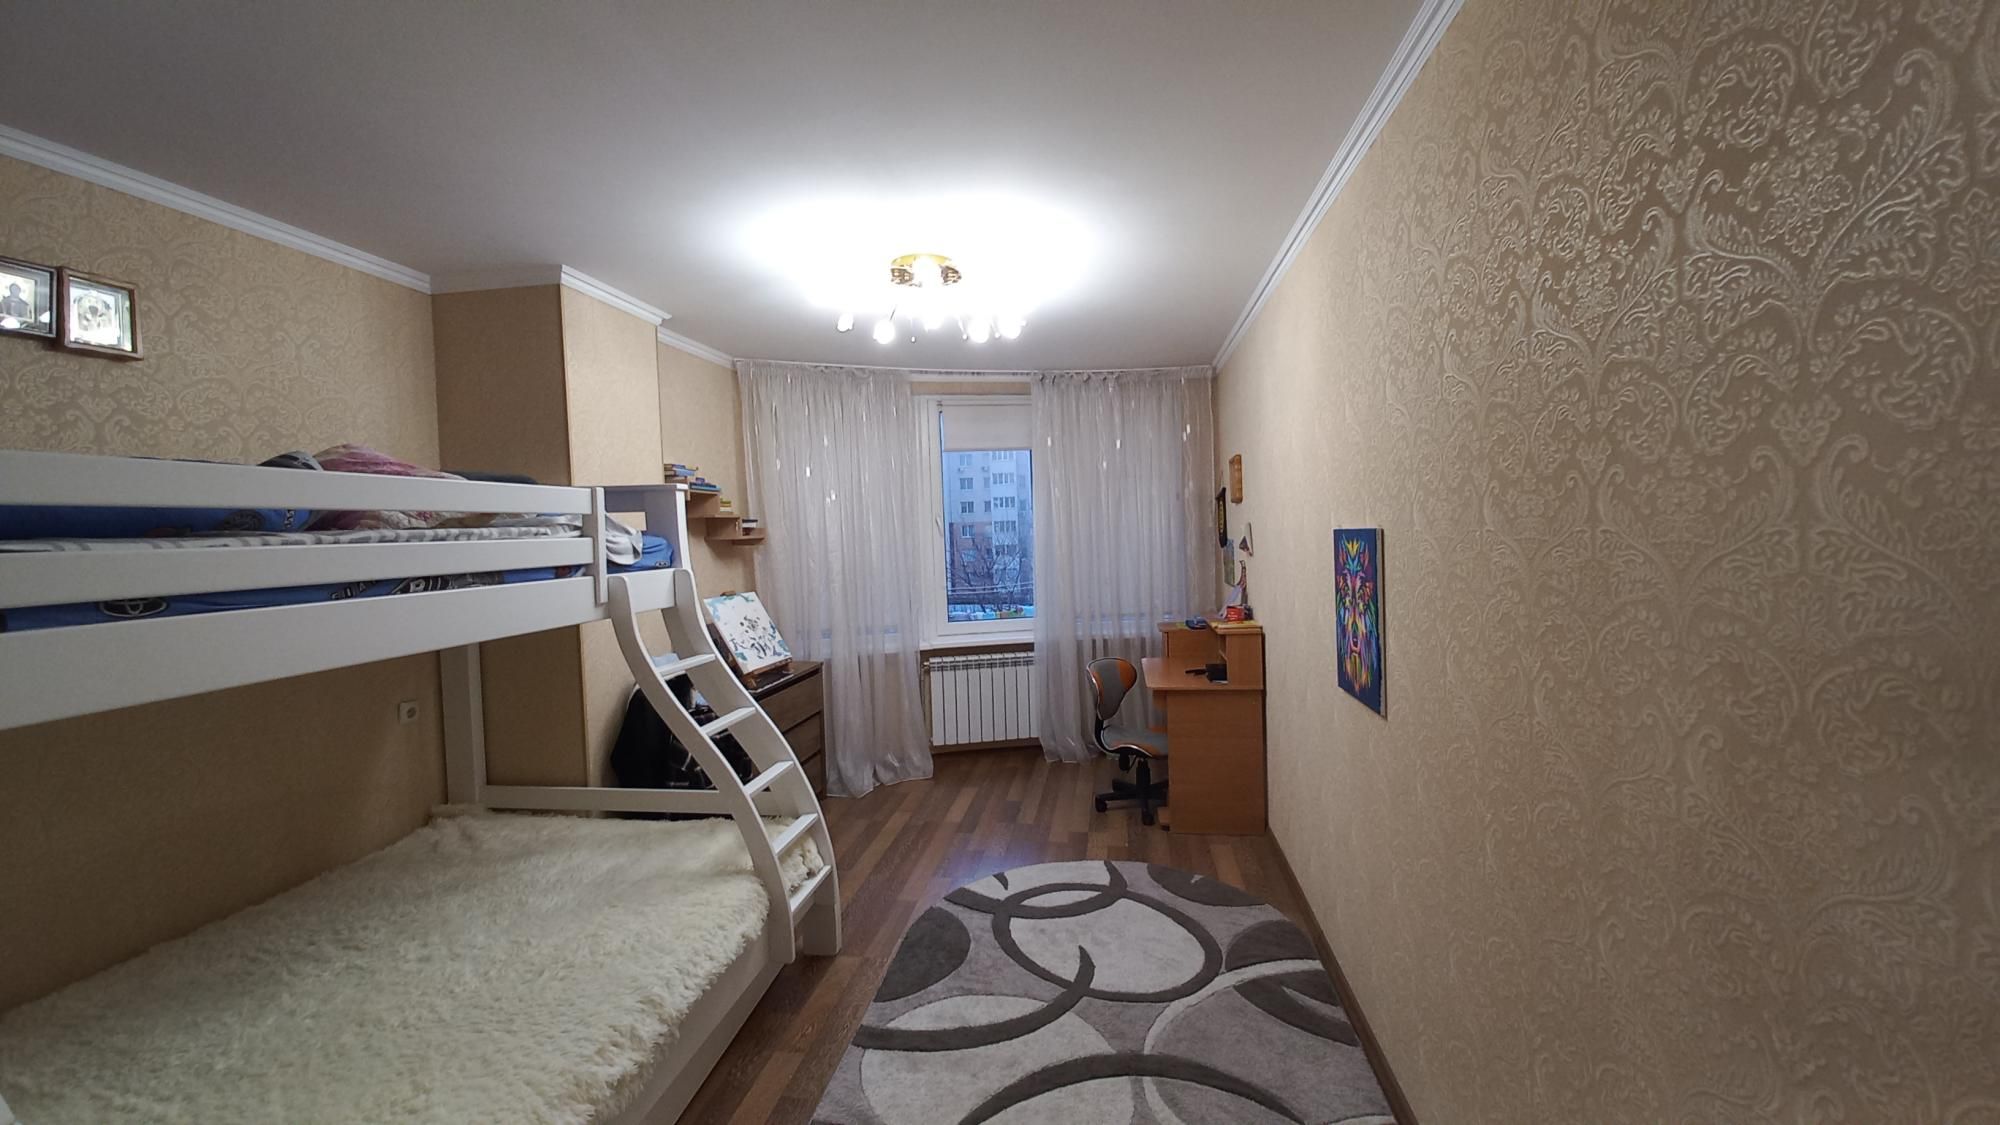 2-х комнатная квартира в Радужном (2-338-632)